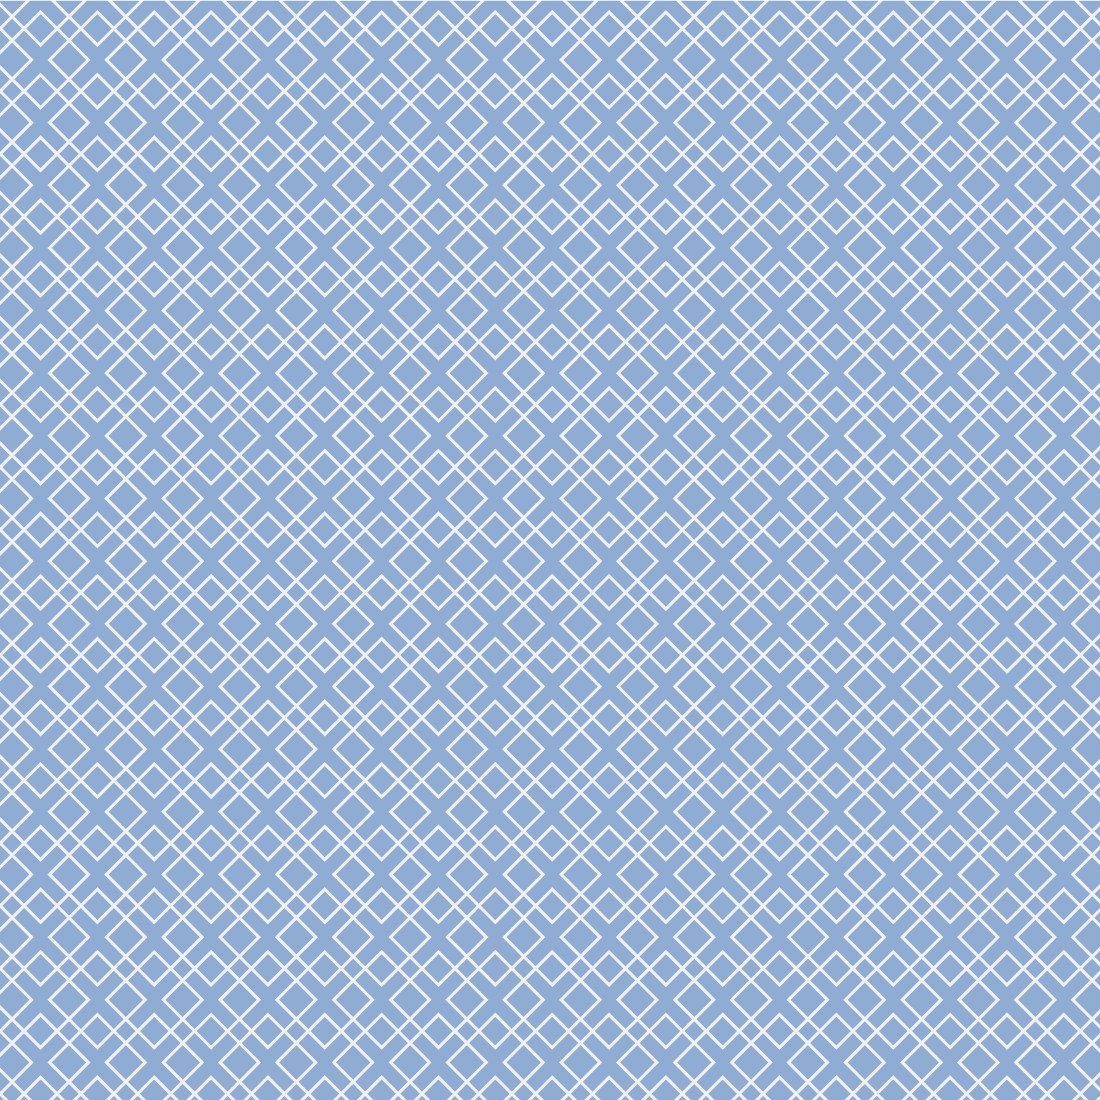 Pattern Design Template in light blue color.